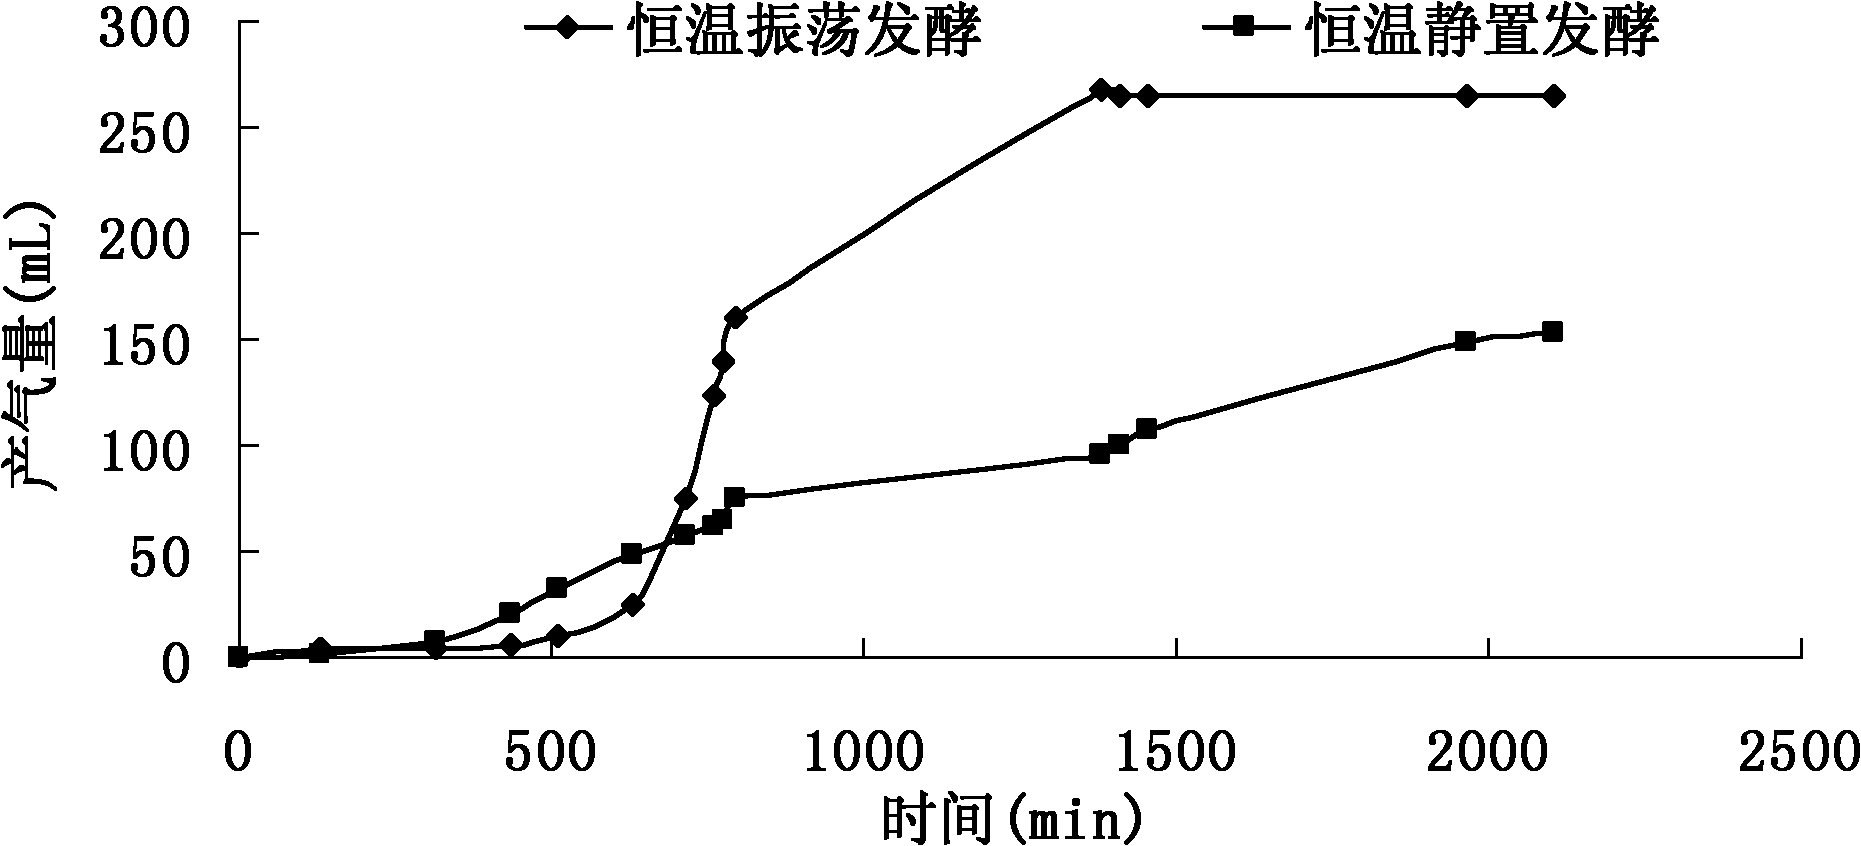 Method for producing hydrogen by fermenting special anaerobic clostridium butyricum